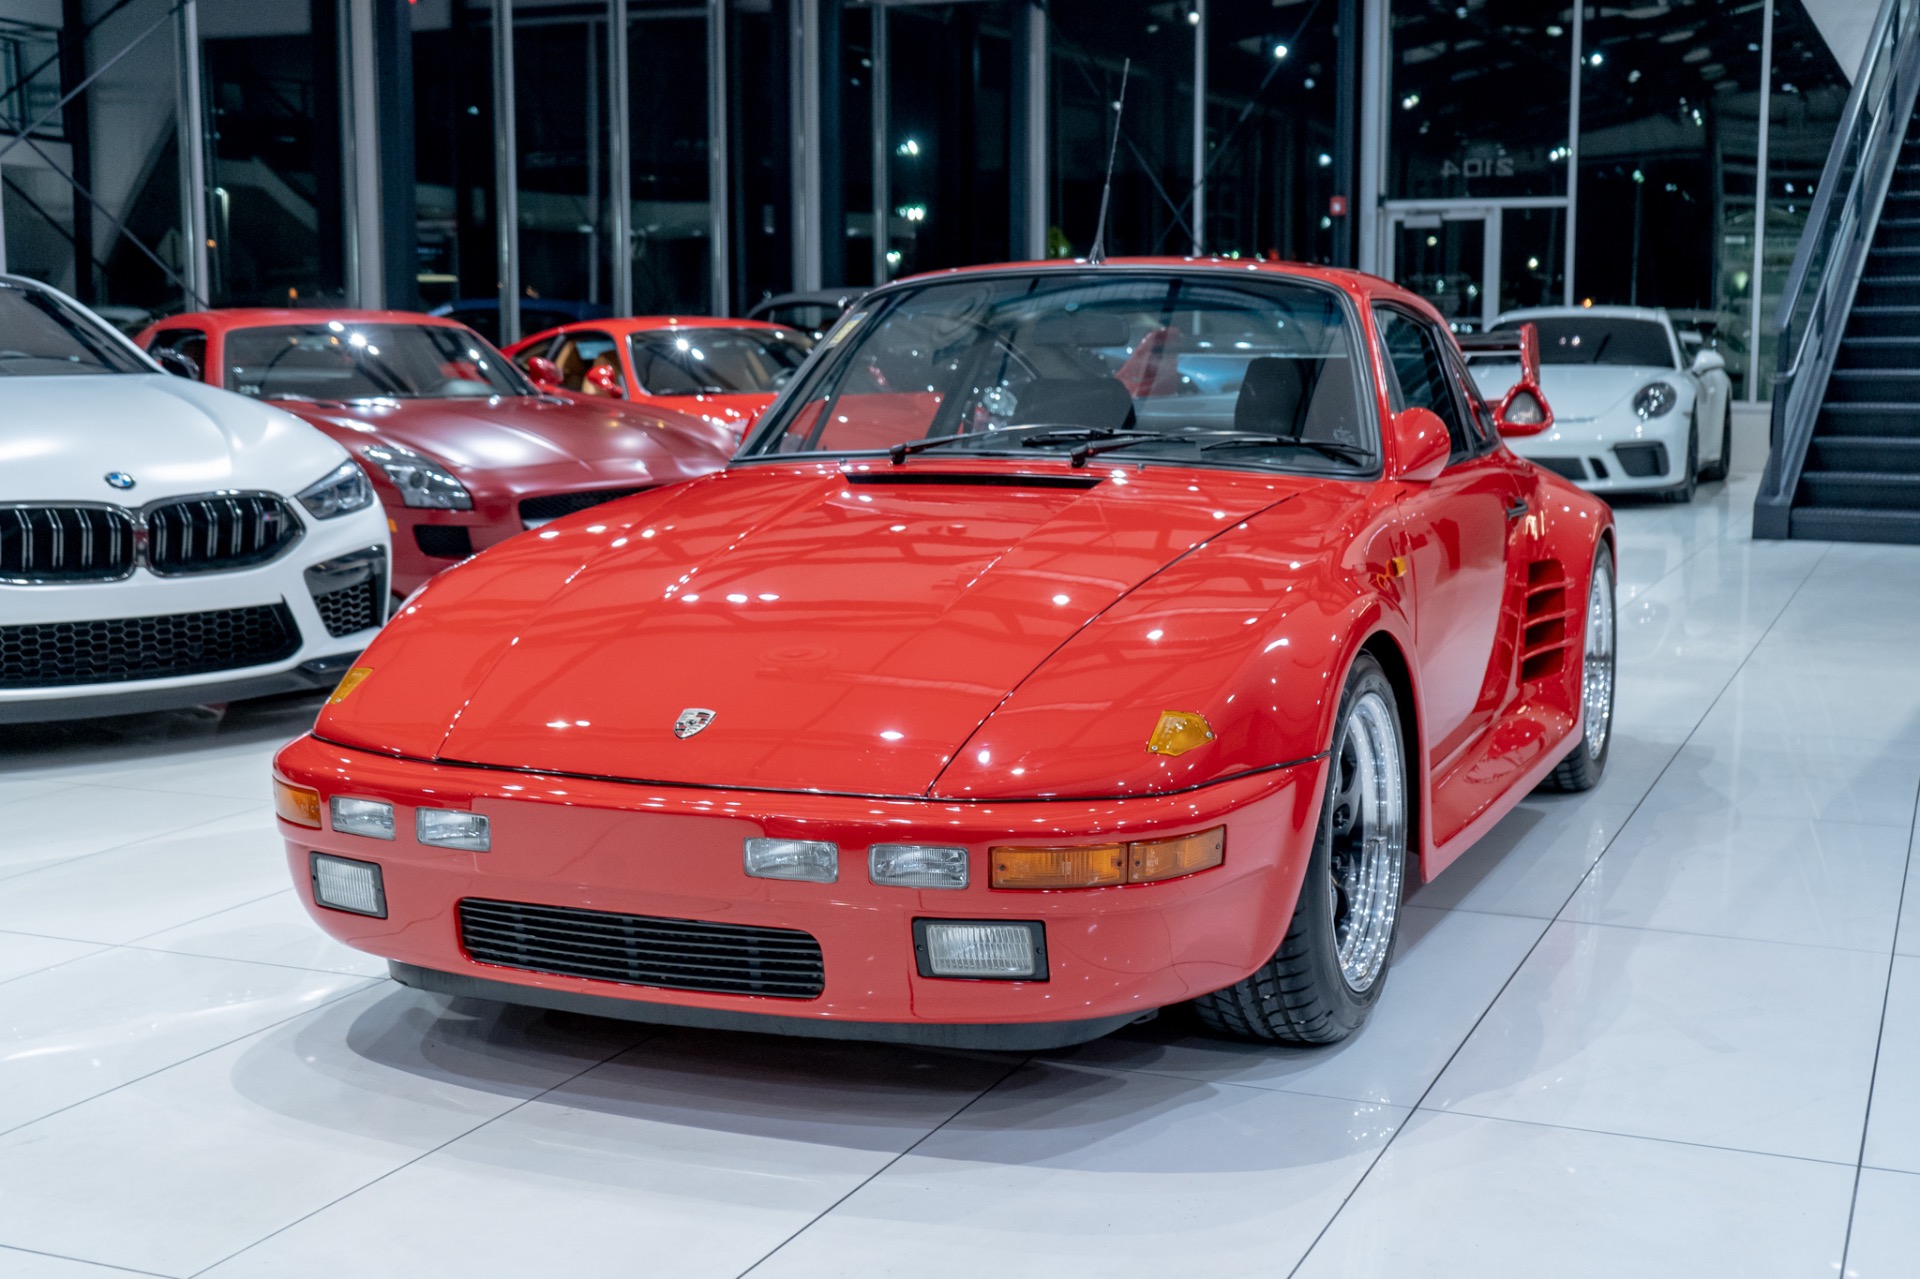 Used-1979-Porsche-930-Turbo-Slantnose-Conversion-K27-Turbo-RUF-InterCooler-27k-Original-Miles